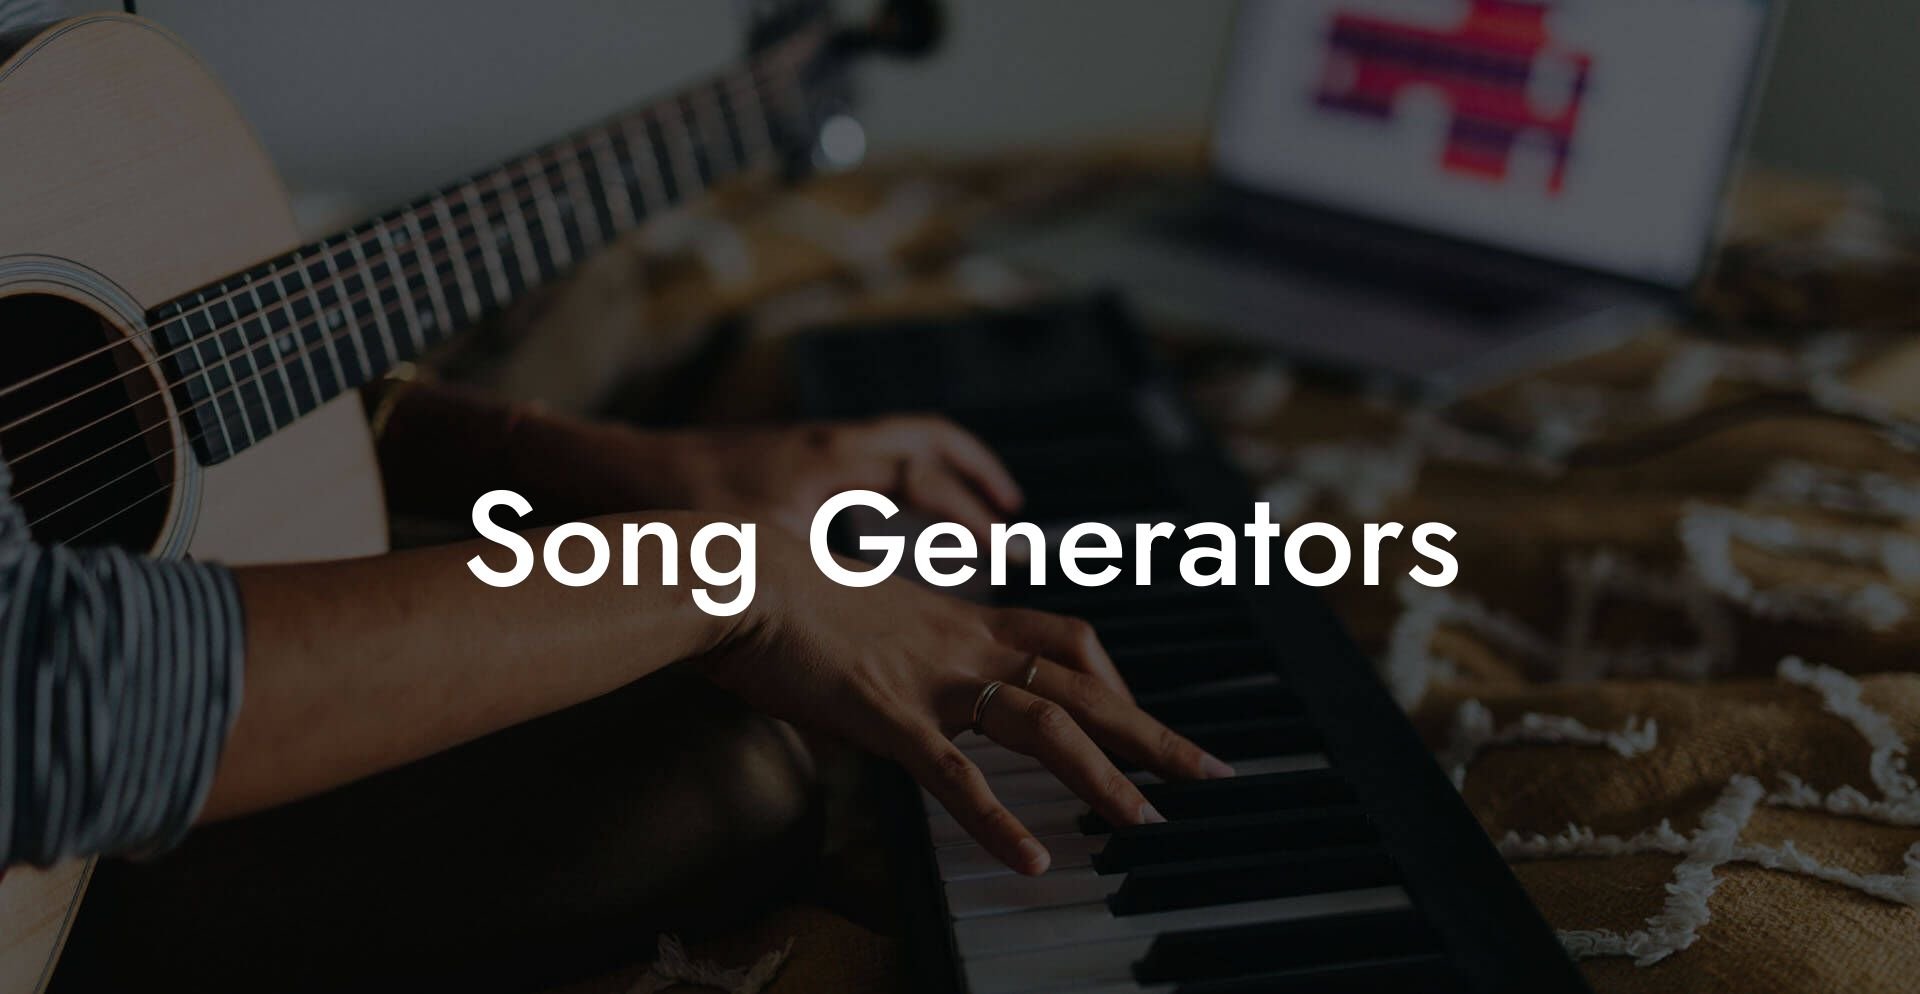 song generators lyric assistant